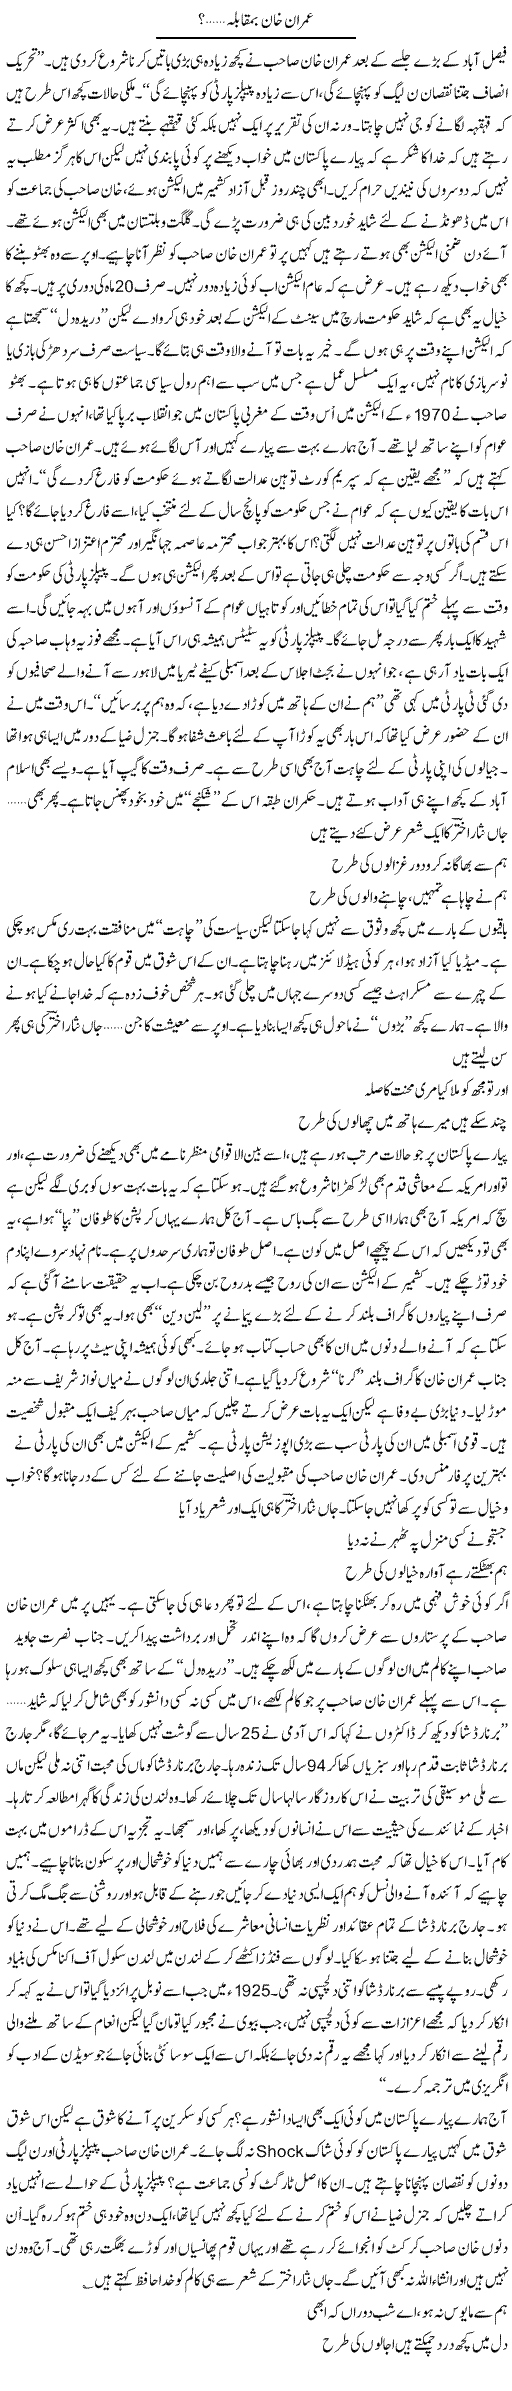 Imran Khan Express Column Ijaz Abdul Hafeez 31 July 2011